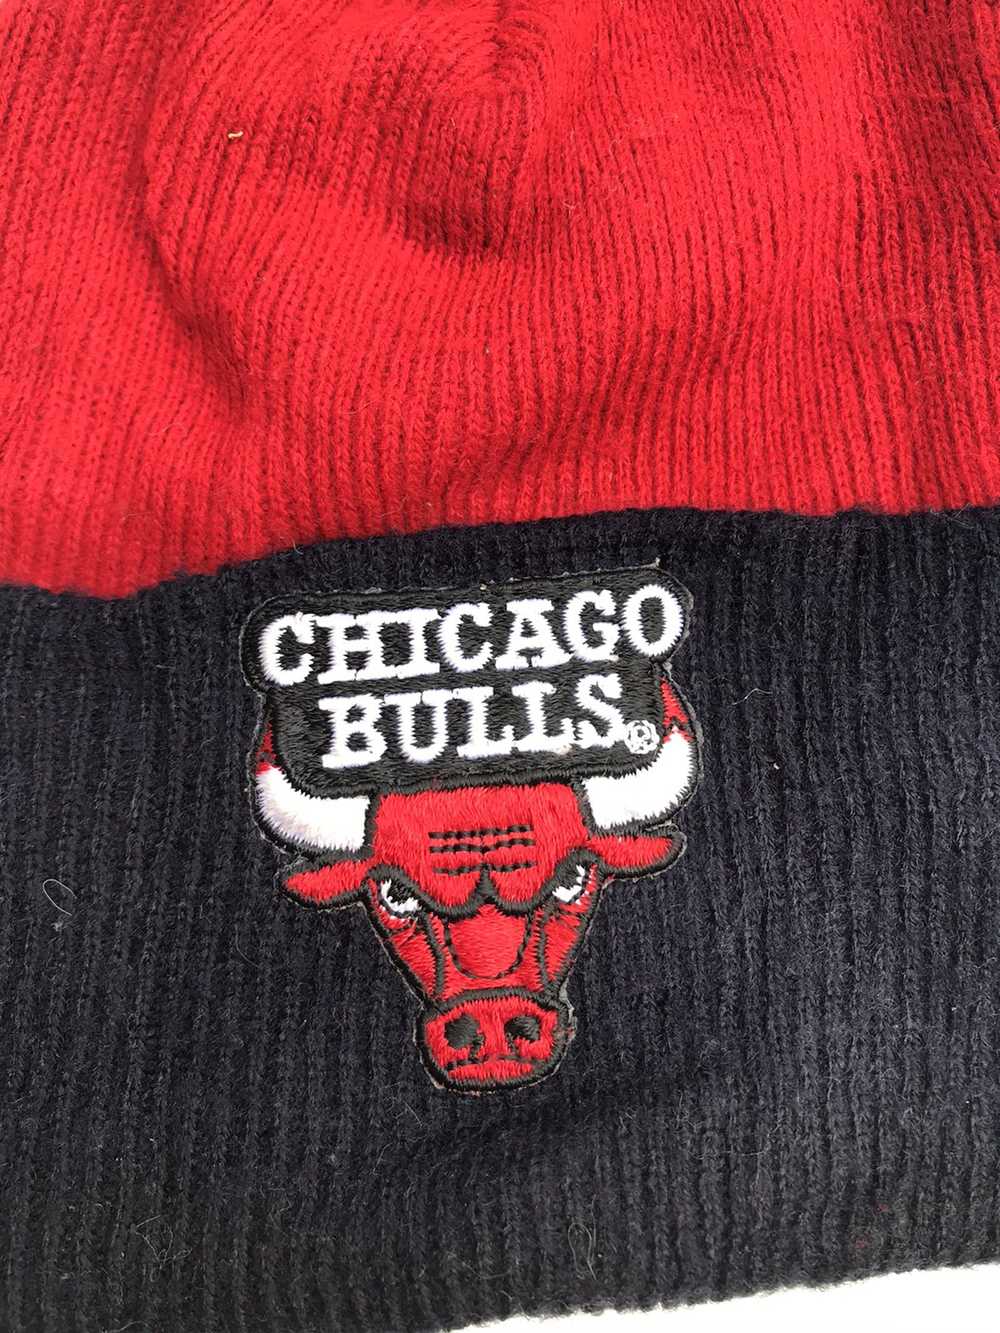 Chicago Bulls Chicago Bulls Beanie hat - image 2